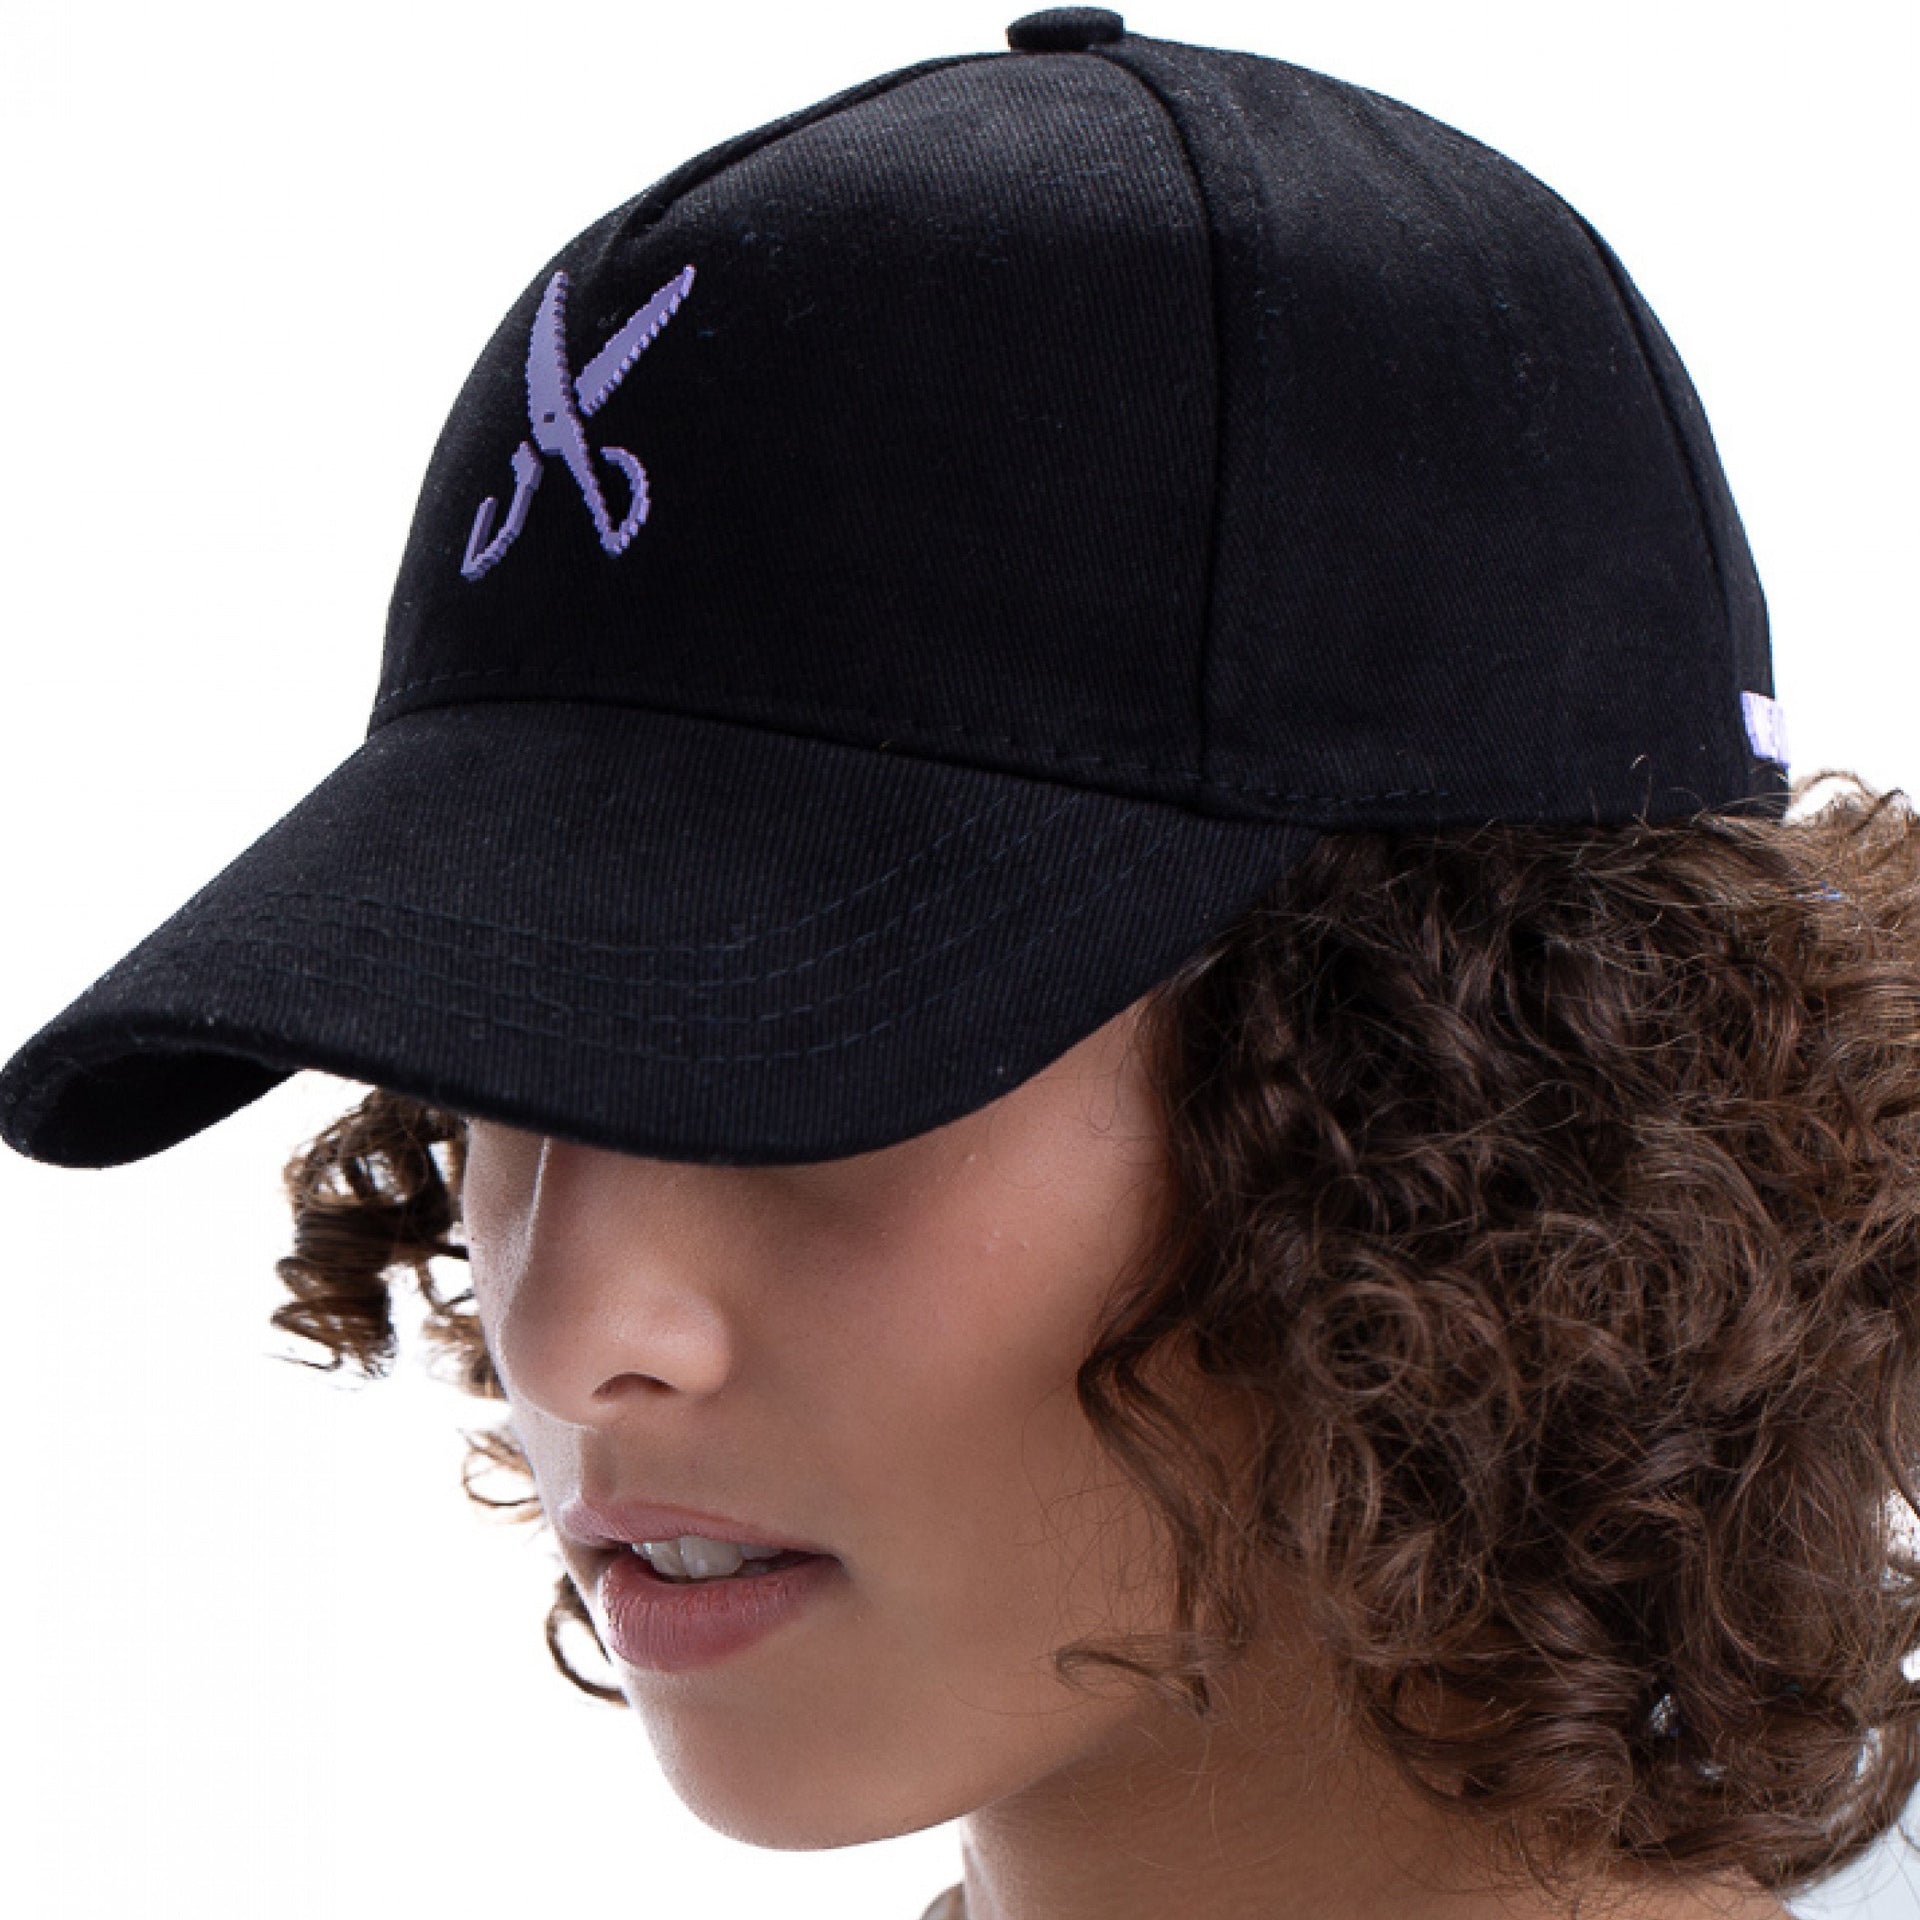 Black & Purple Cap By Weaver Design